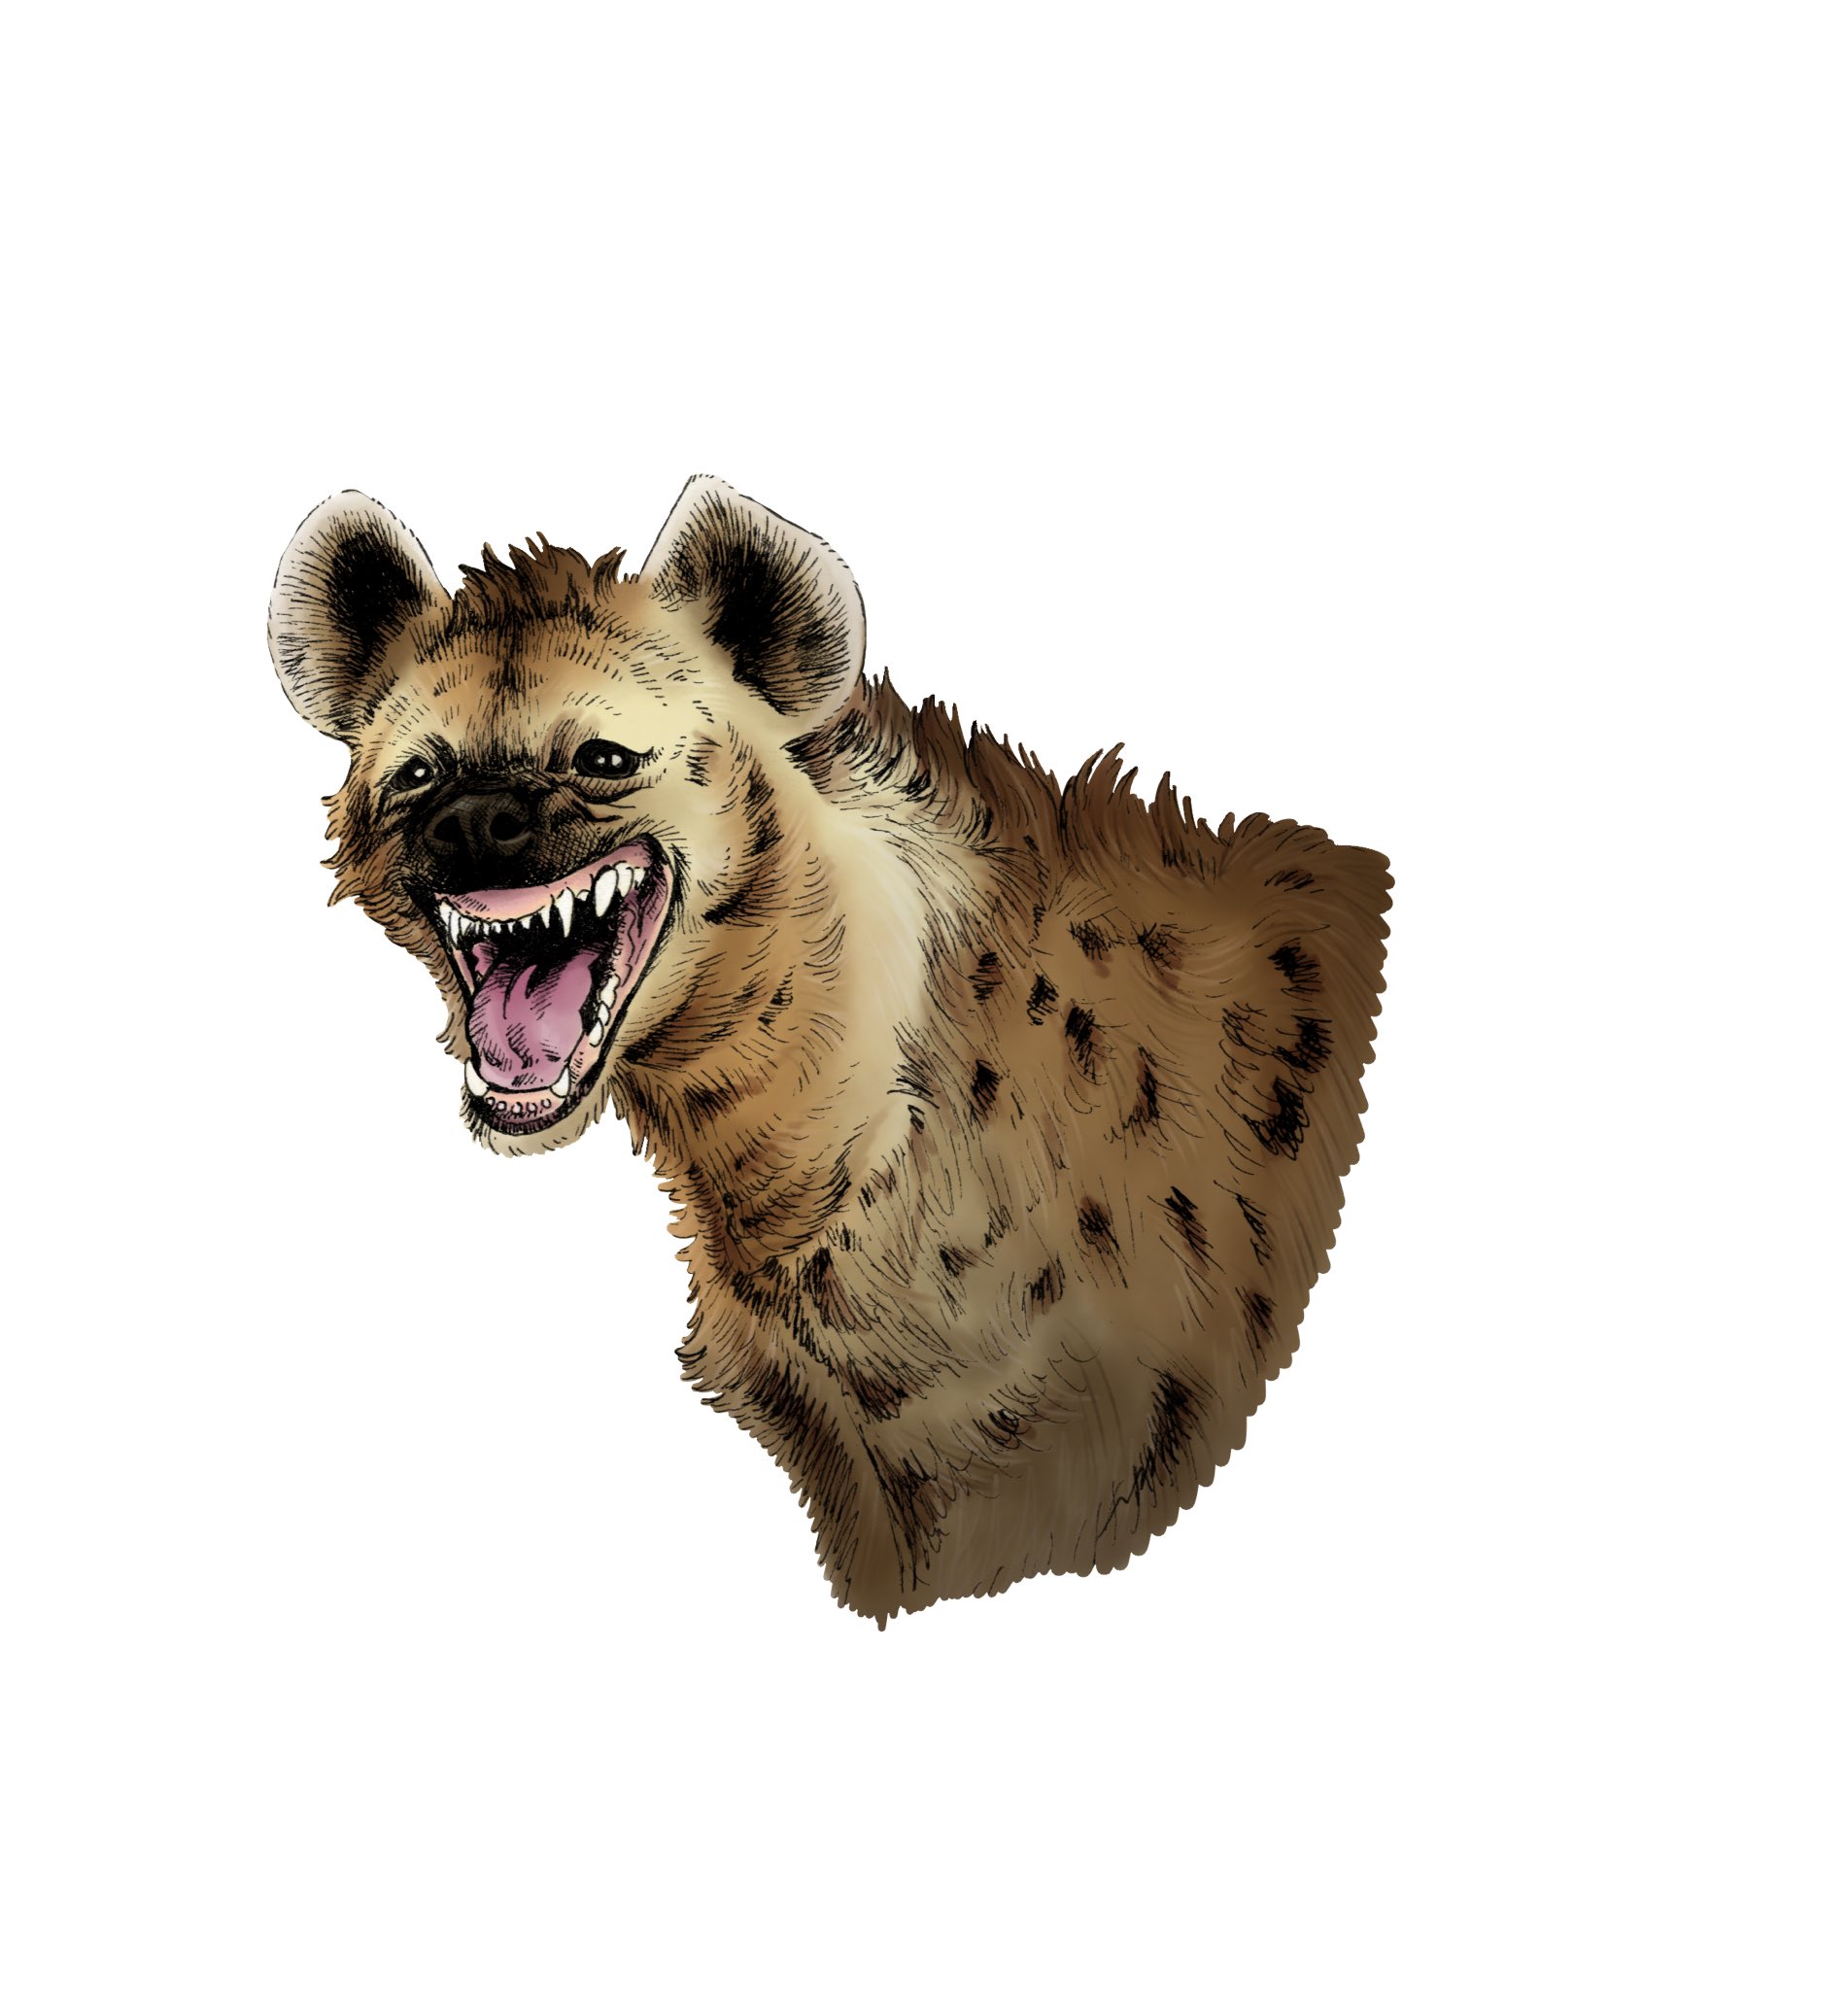 “Coloured my #Inktober2019 hyena drawing #hyena #drawing” .